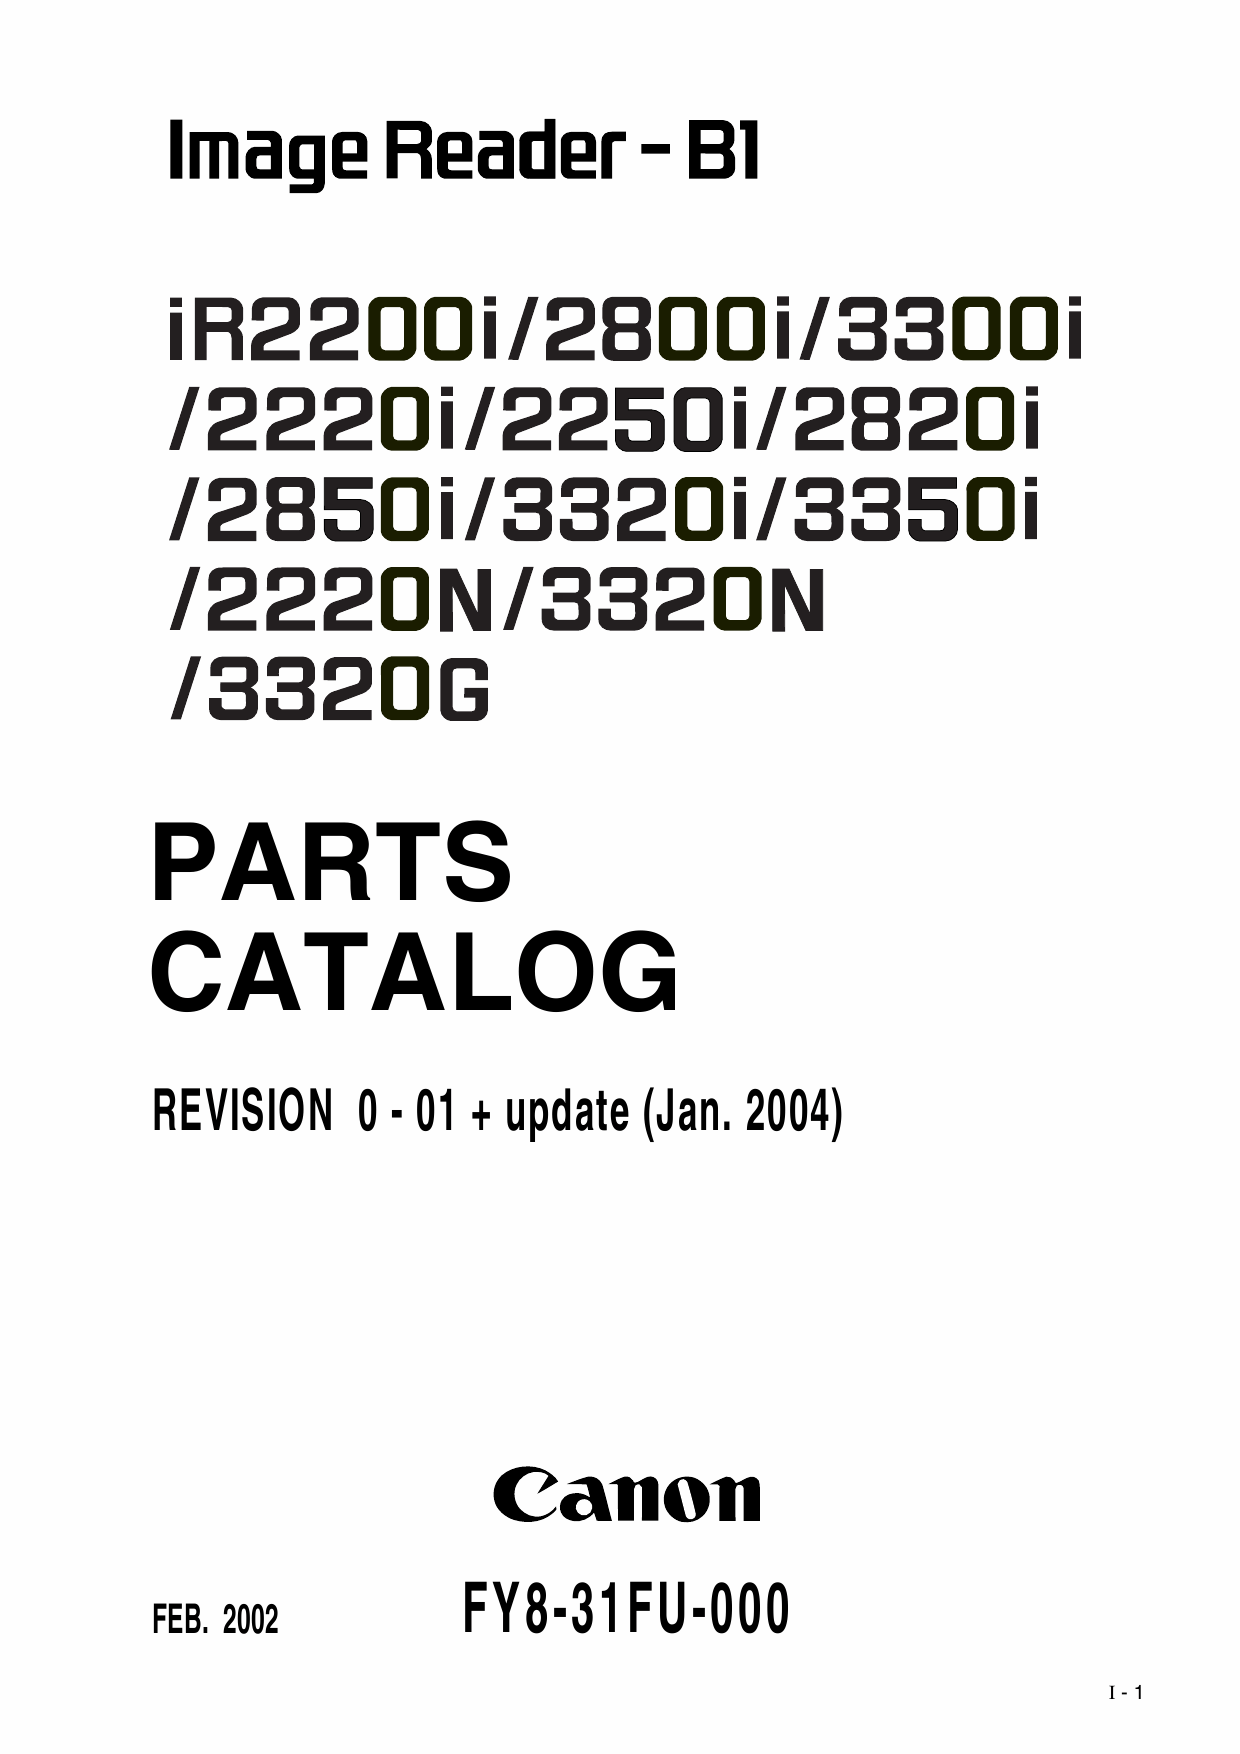 Canon imageRUNNER iR-2200i 2800i 3300i 2220i 2250i 2820i 2850i 3320i 3350i 2220N 3320N Parts Catalog Manual-1